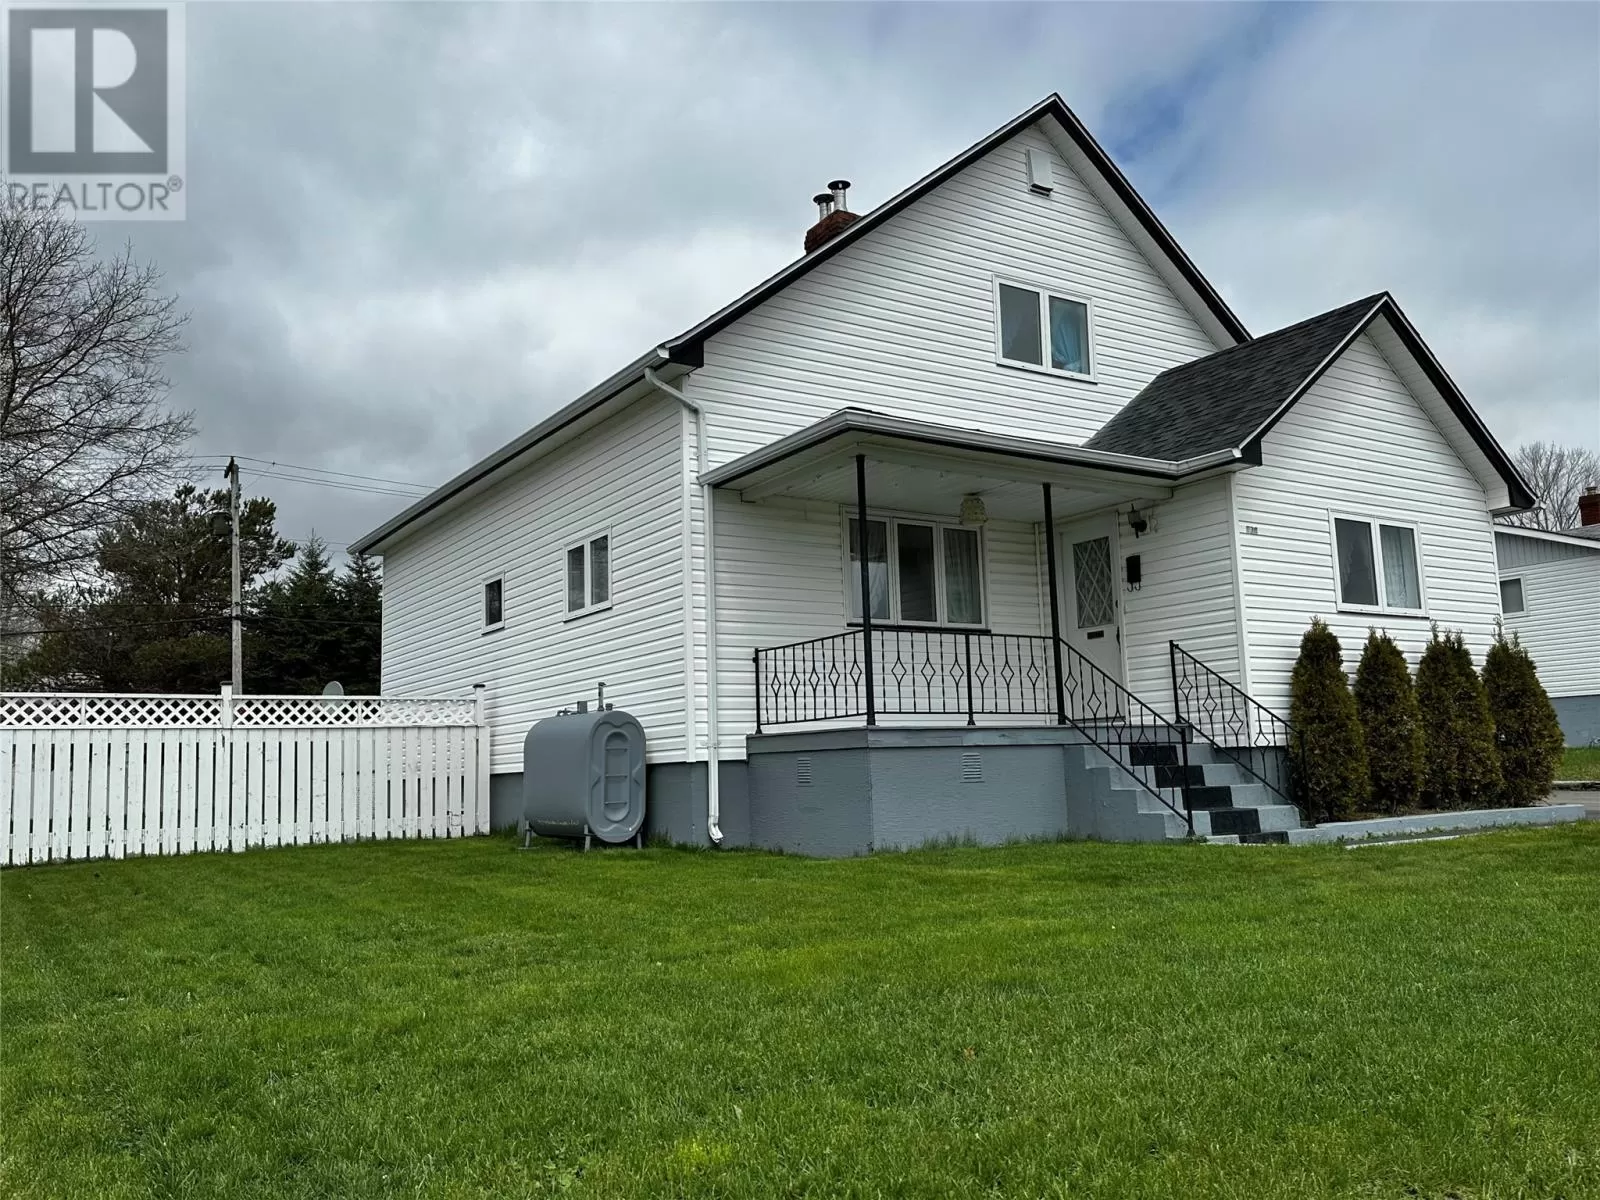 House for rent: 174 Lincoln Road, Grand Falls-Windsor, Newfoundland & Labrador A2A 1P5